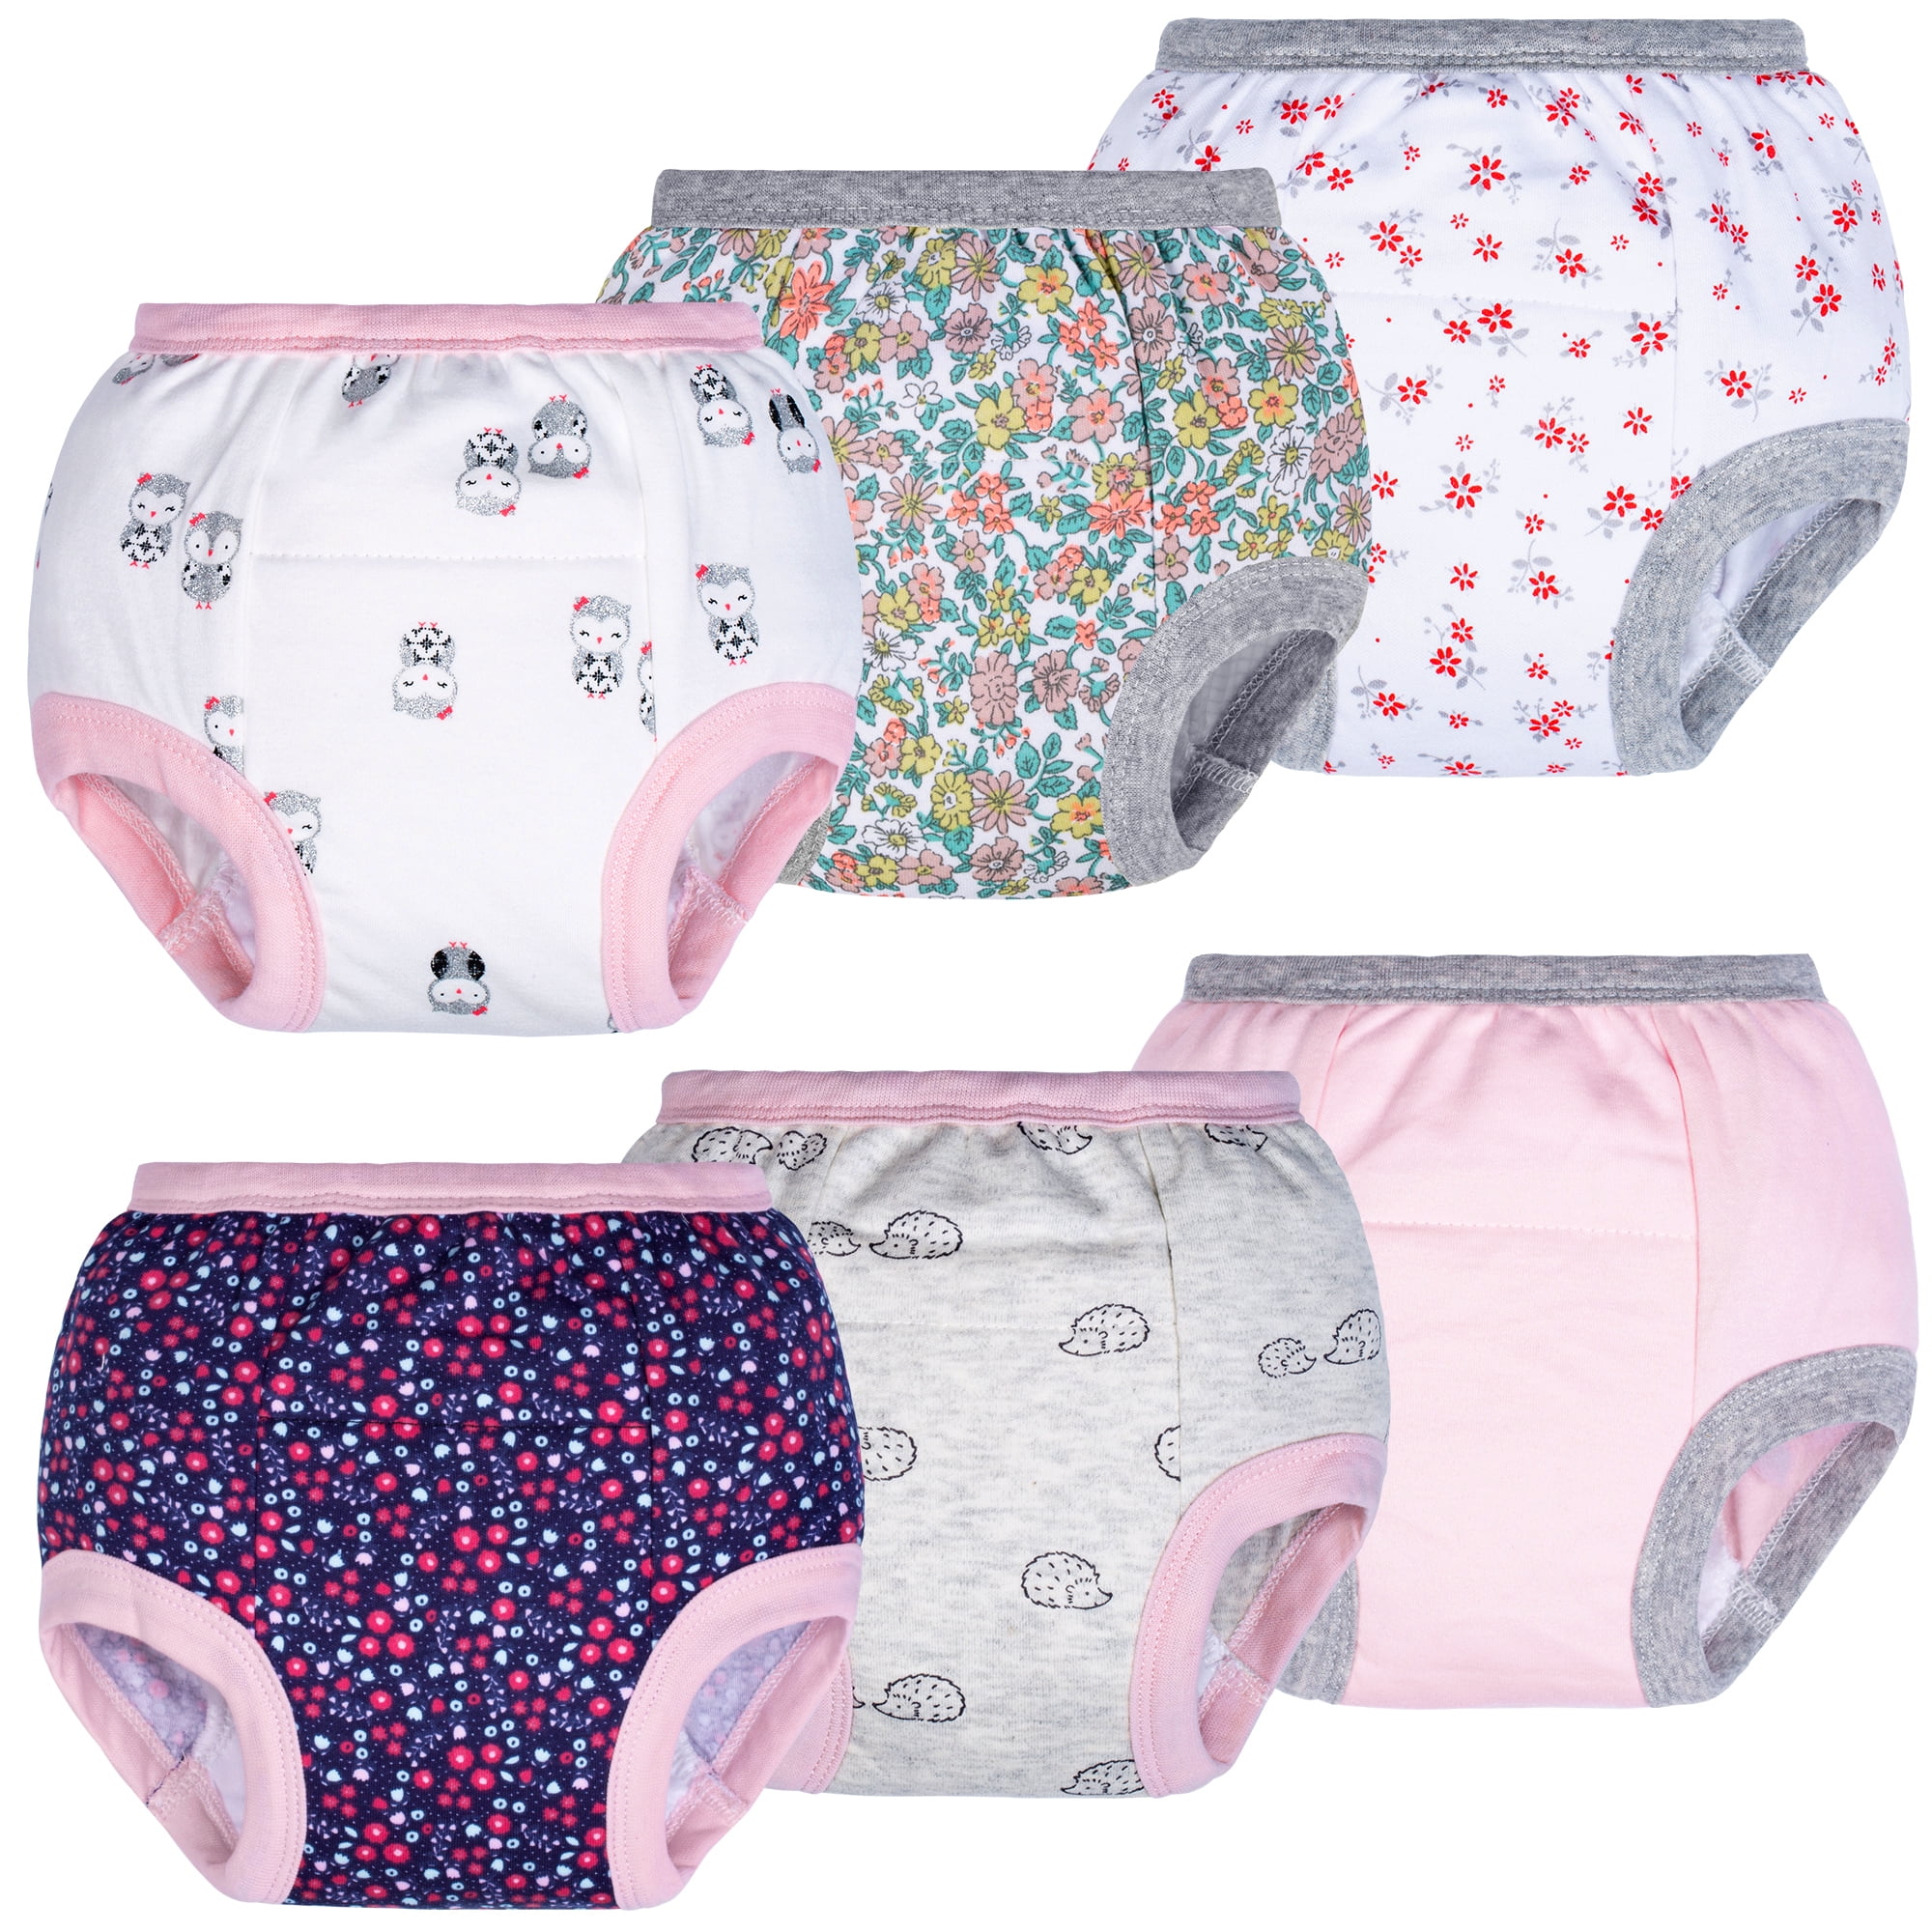 BIG ELEPHANT Toddler Potty Training Pants, Cotton Soft Training Underwear  for Girls, 12-24 Months 